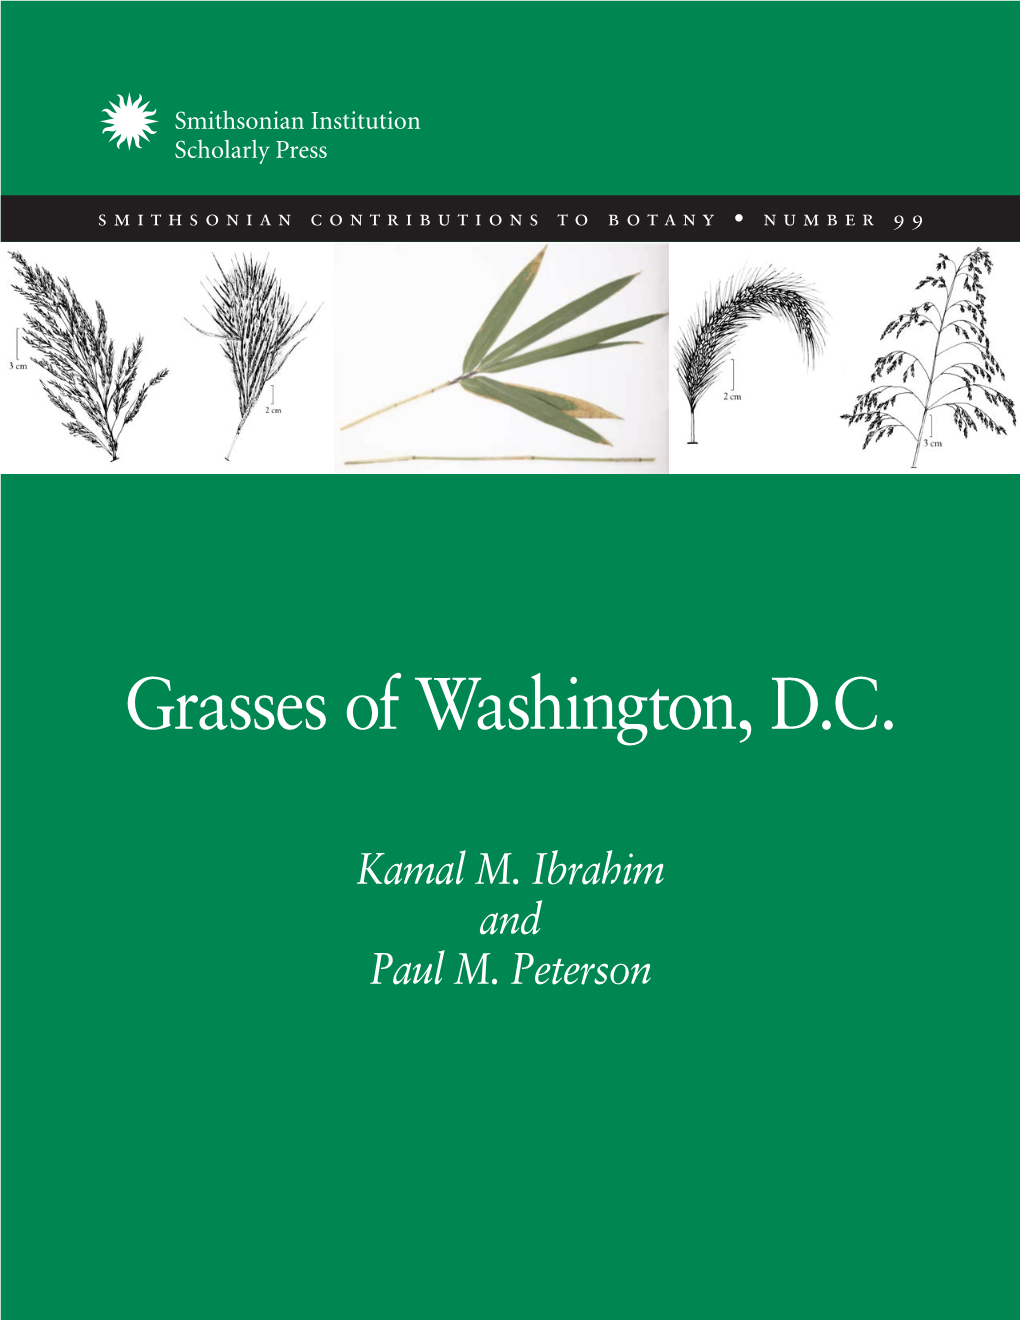 Grasses of Washington, D.C